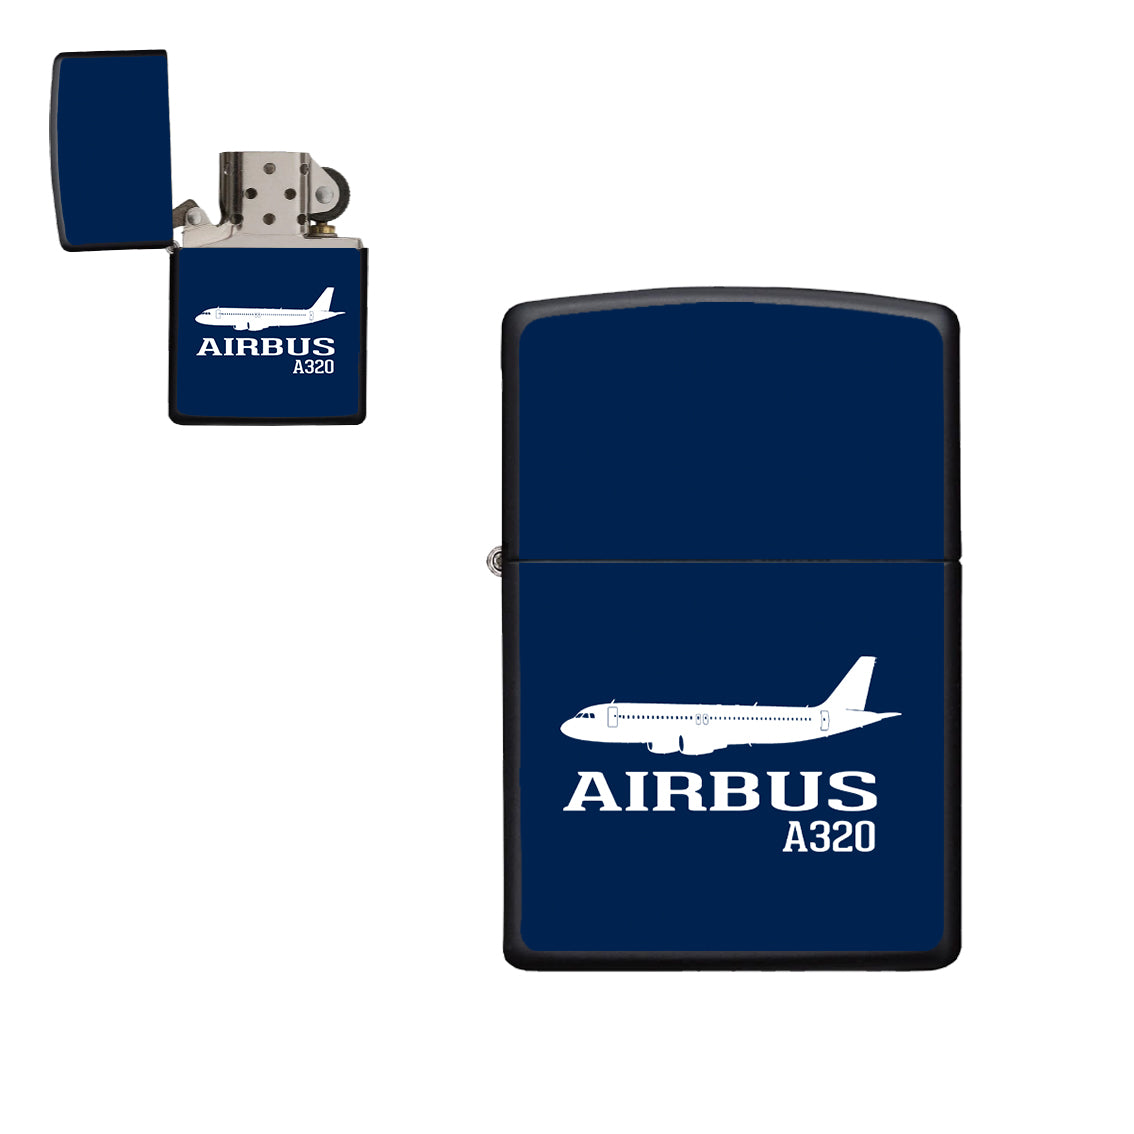 Airbus A320 Printed Designed Metal Lighters